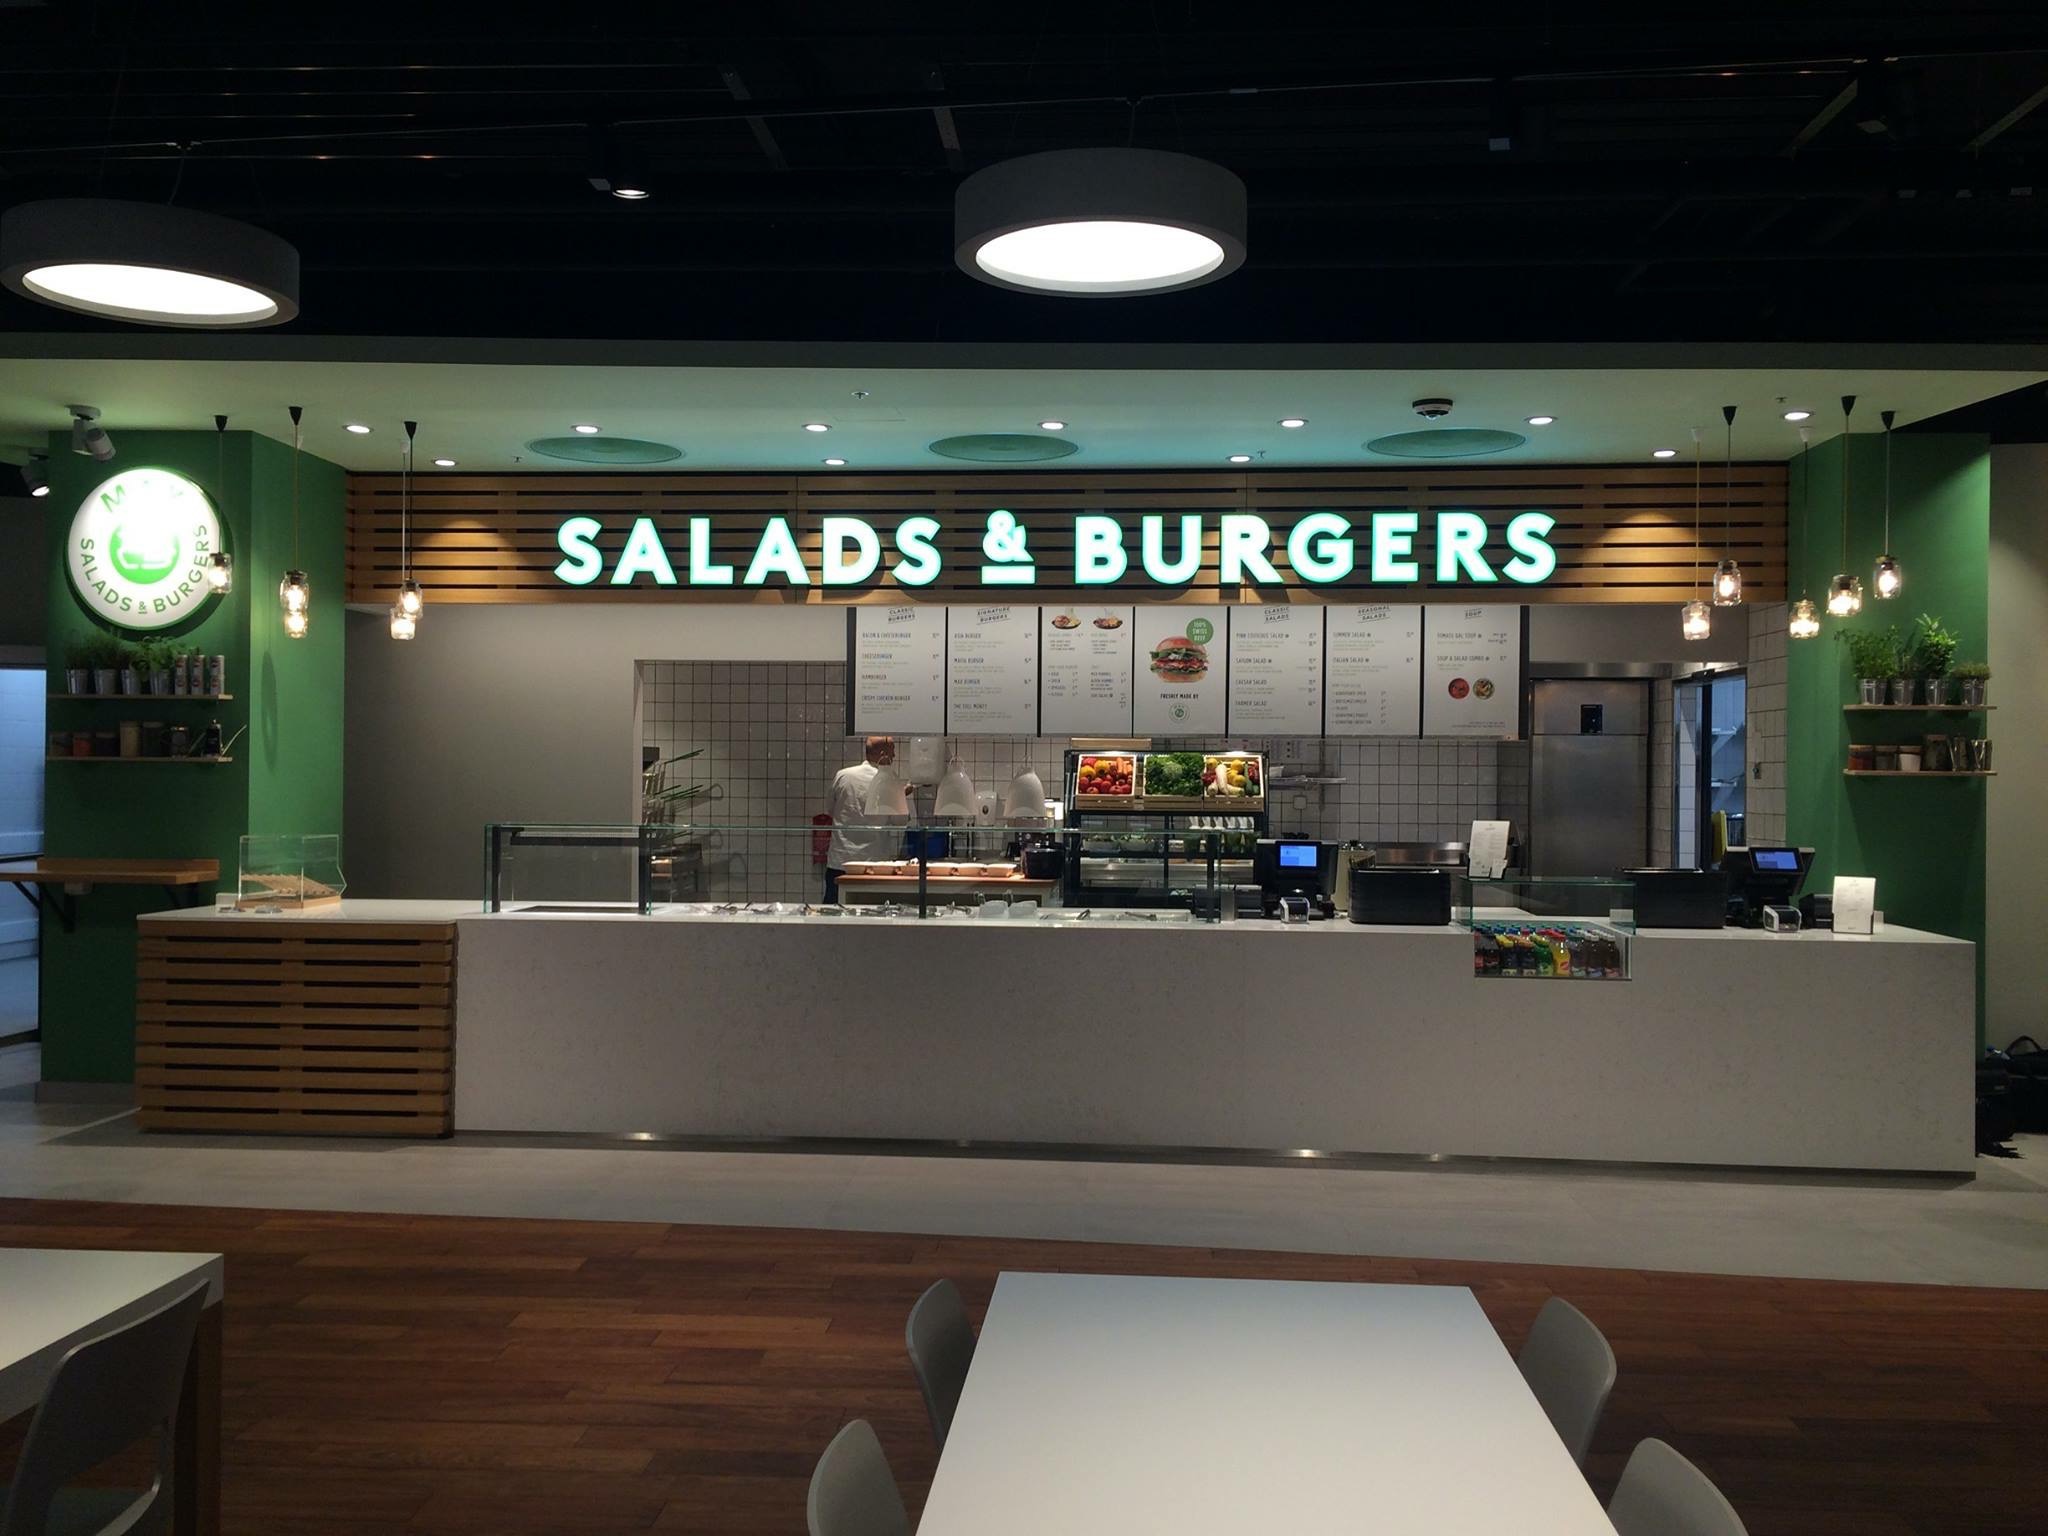 Max Salads & Burgers Tivoli Spreitenbach